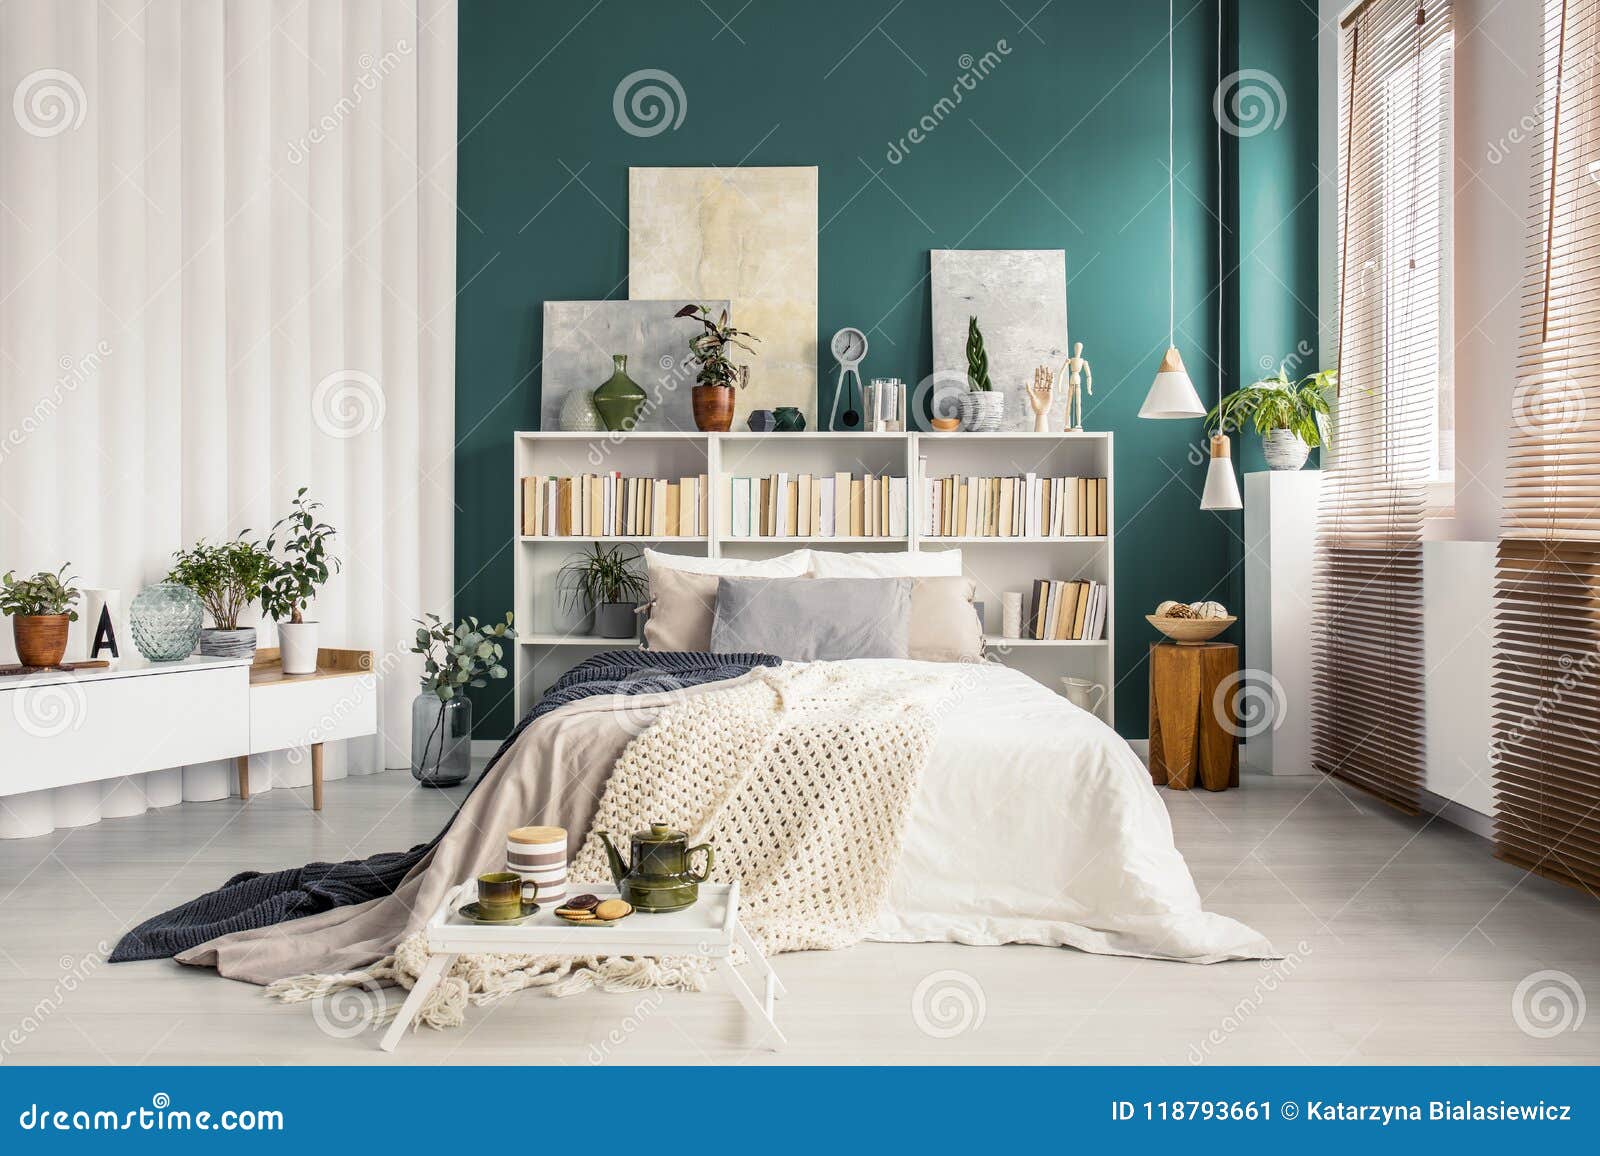 bookcase headboard in green bedroom